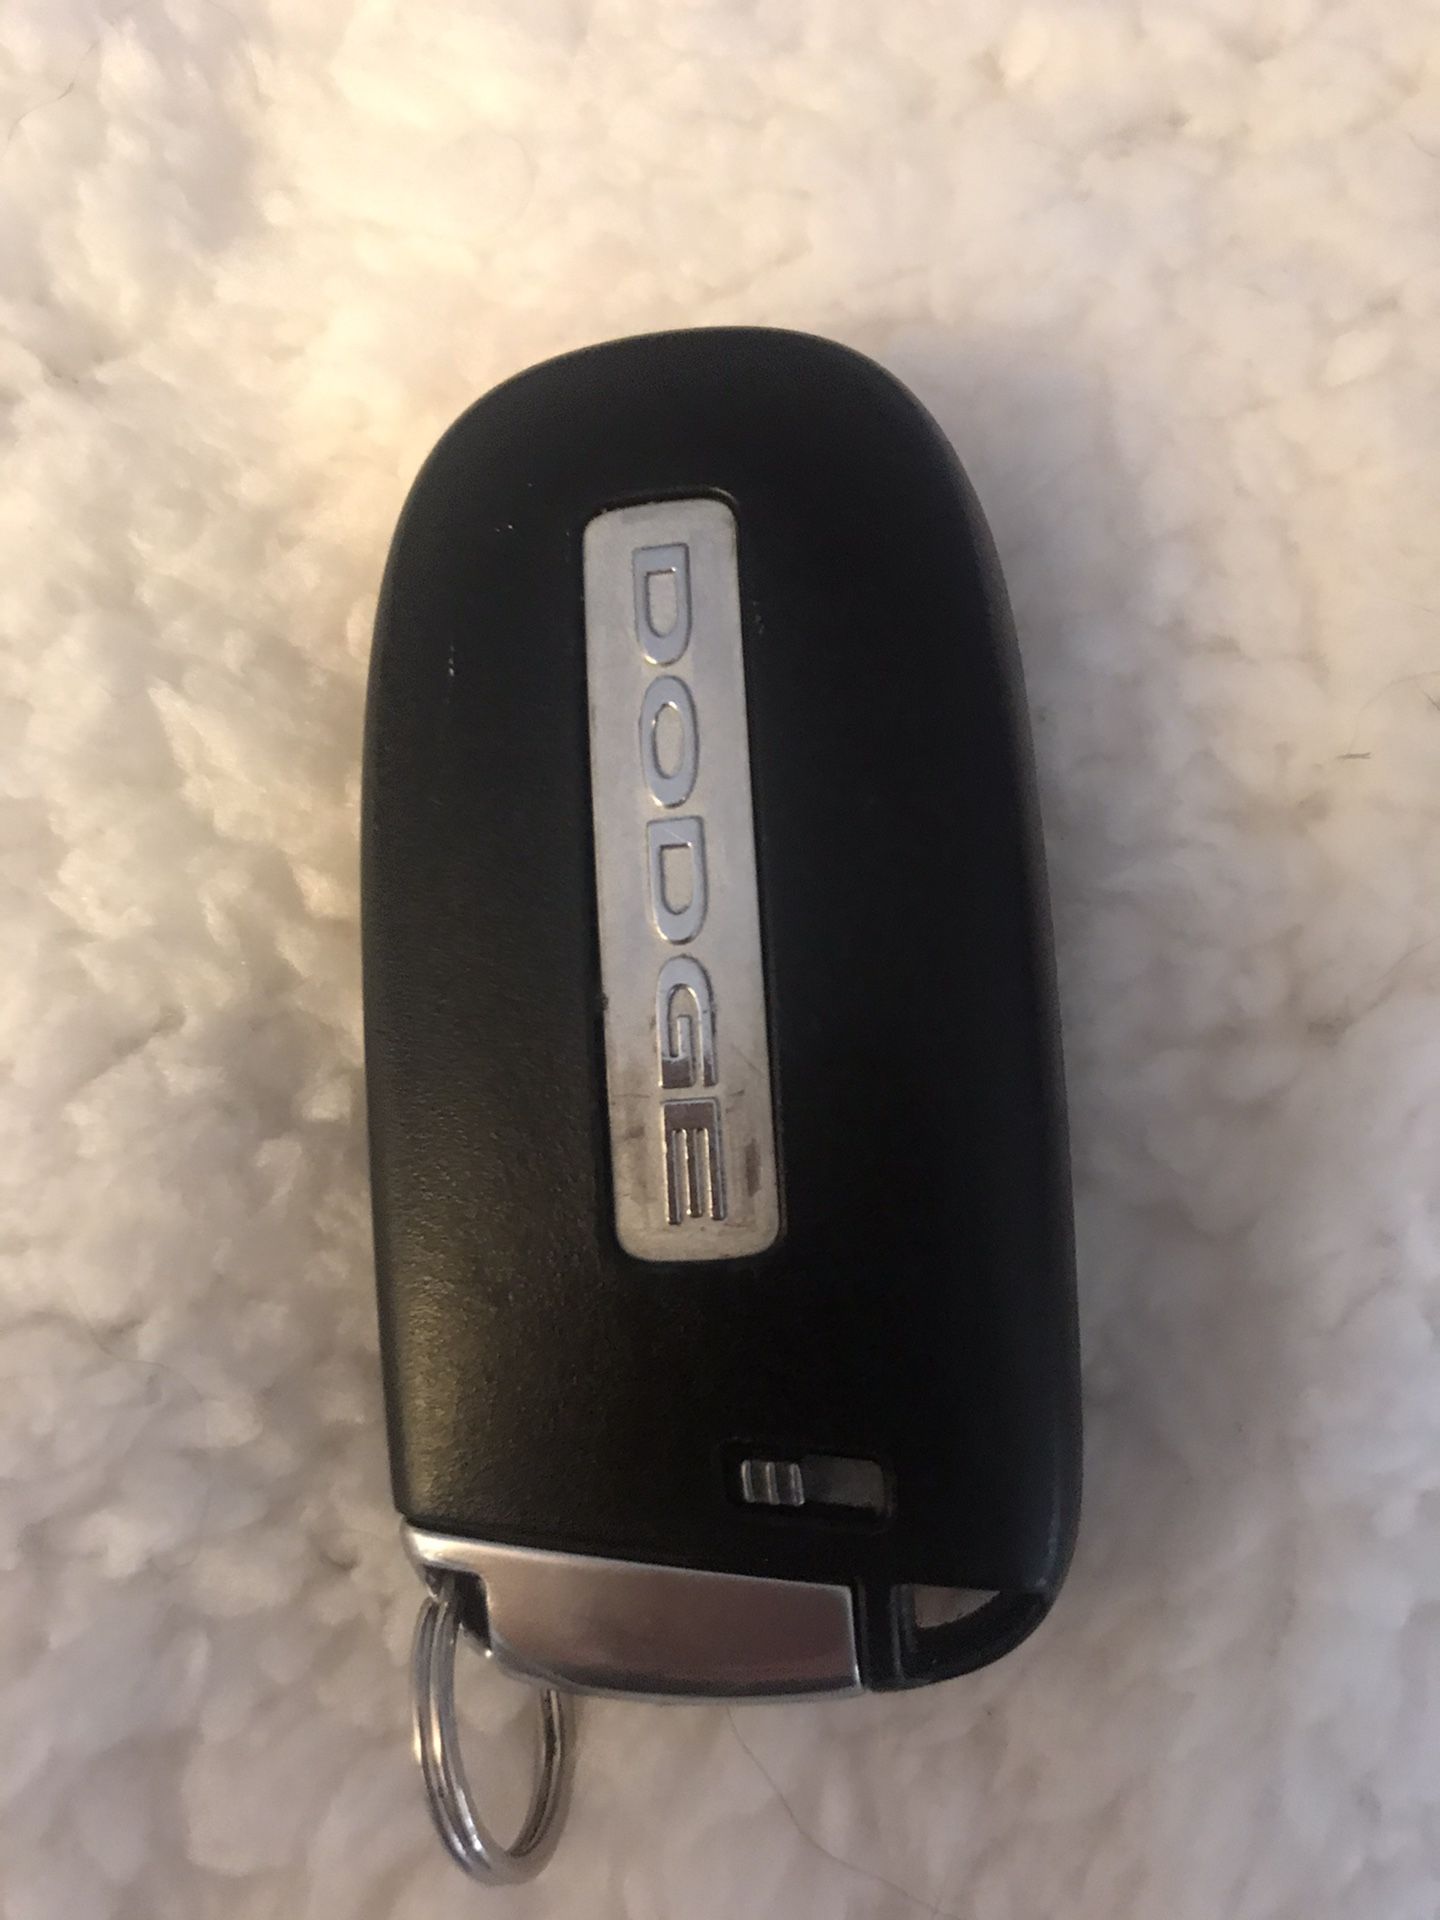 Dodge Key Fob off 2018 Journey